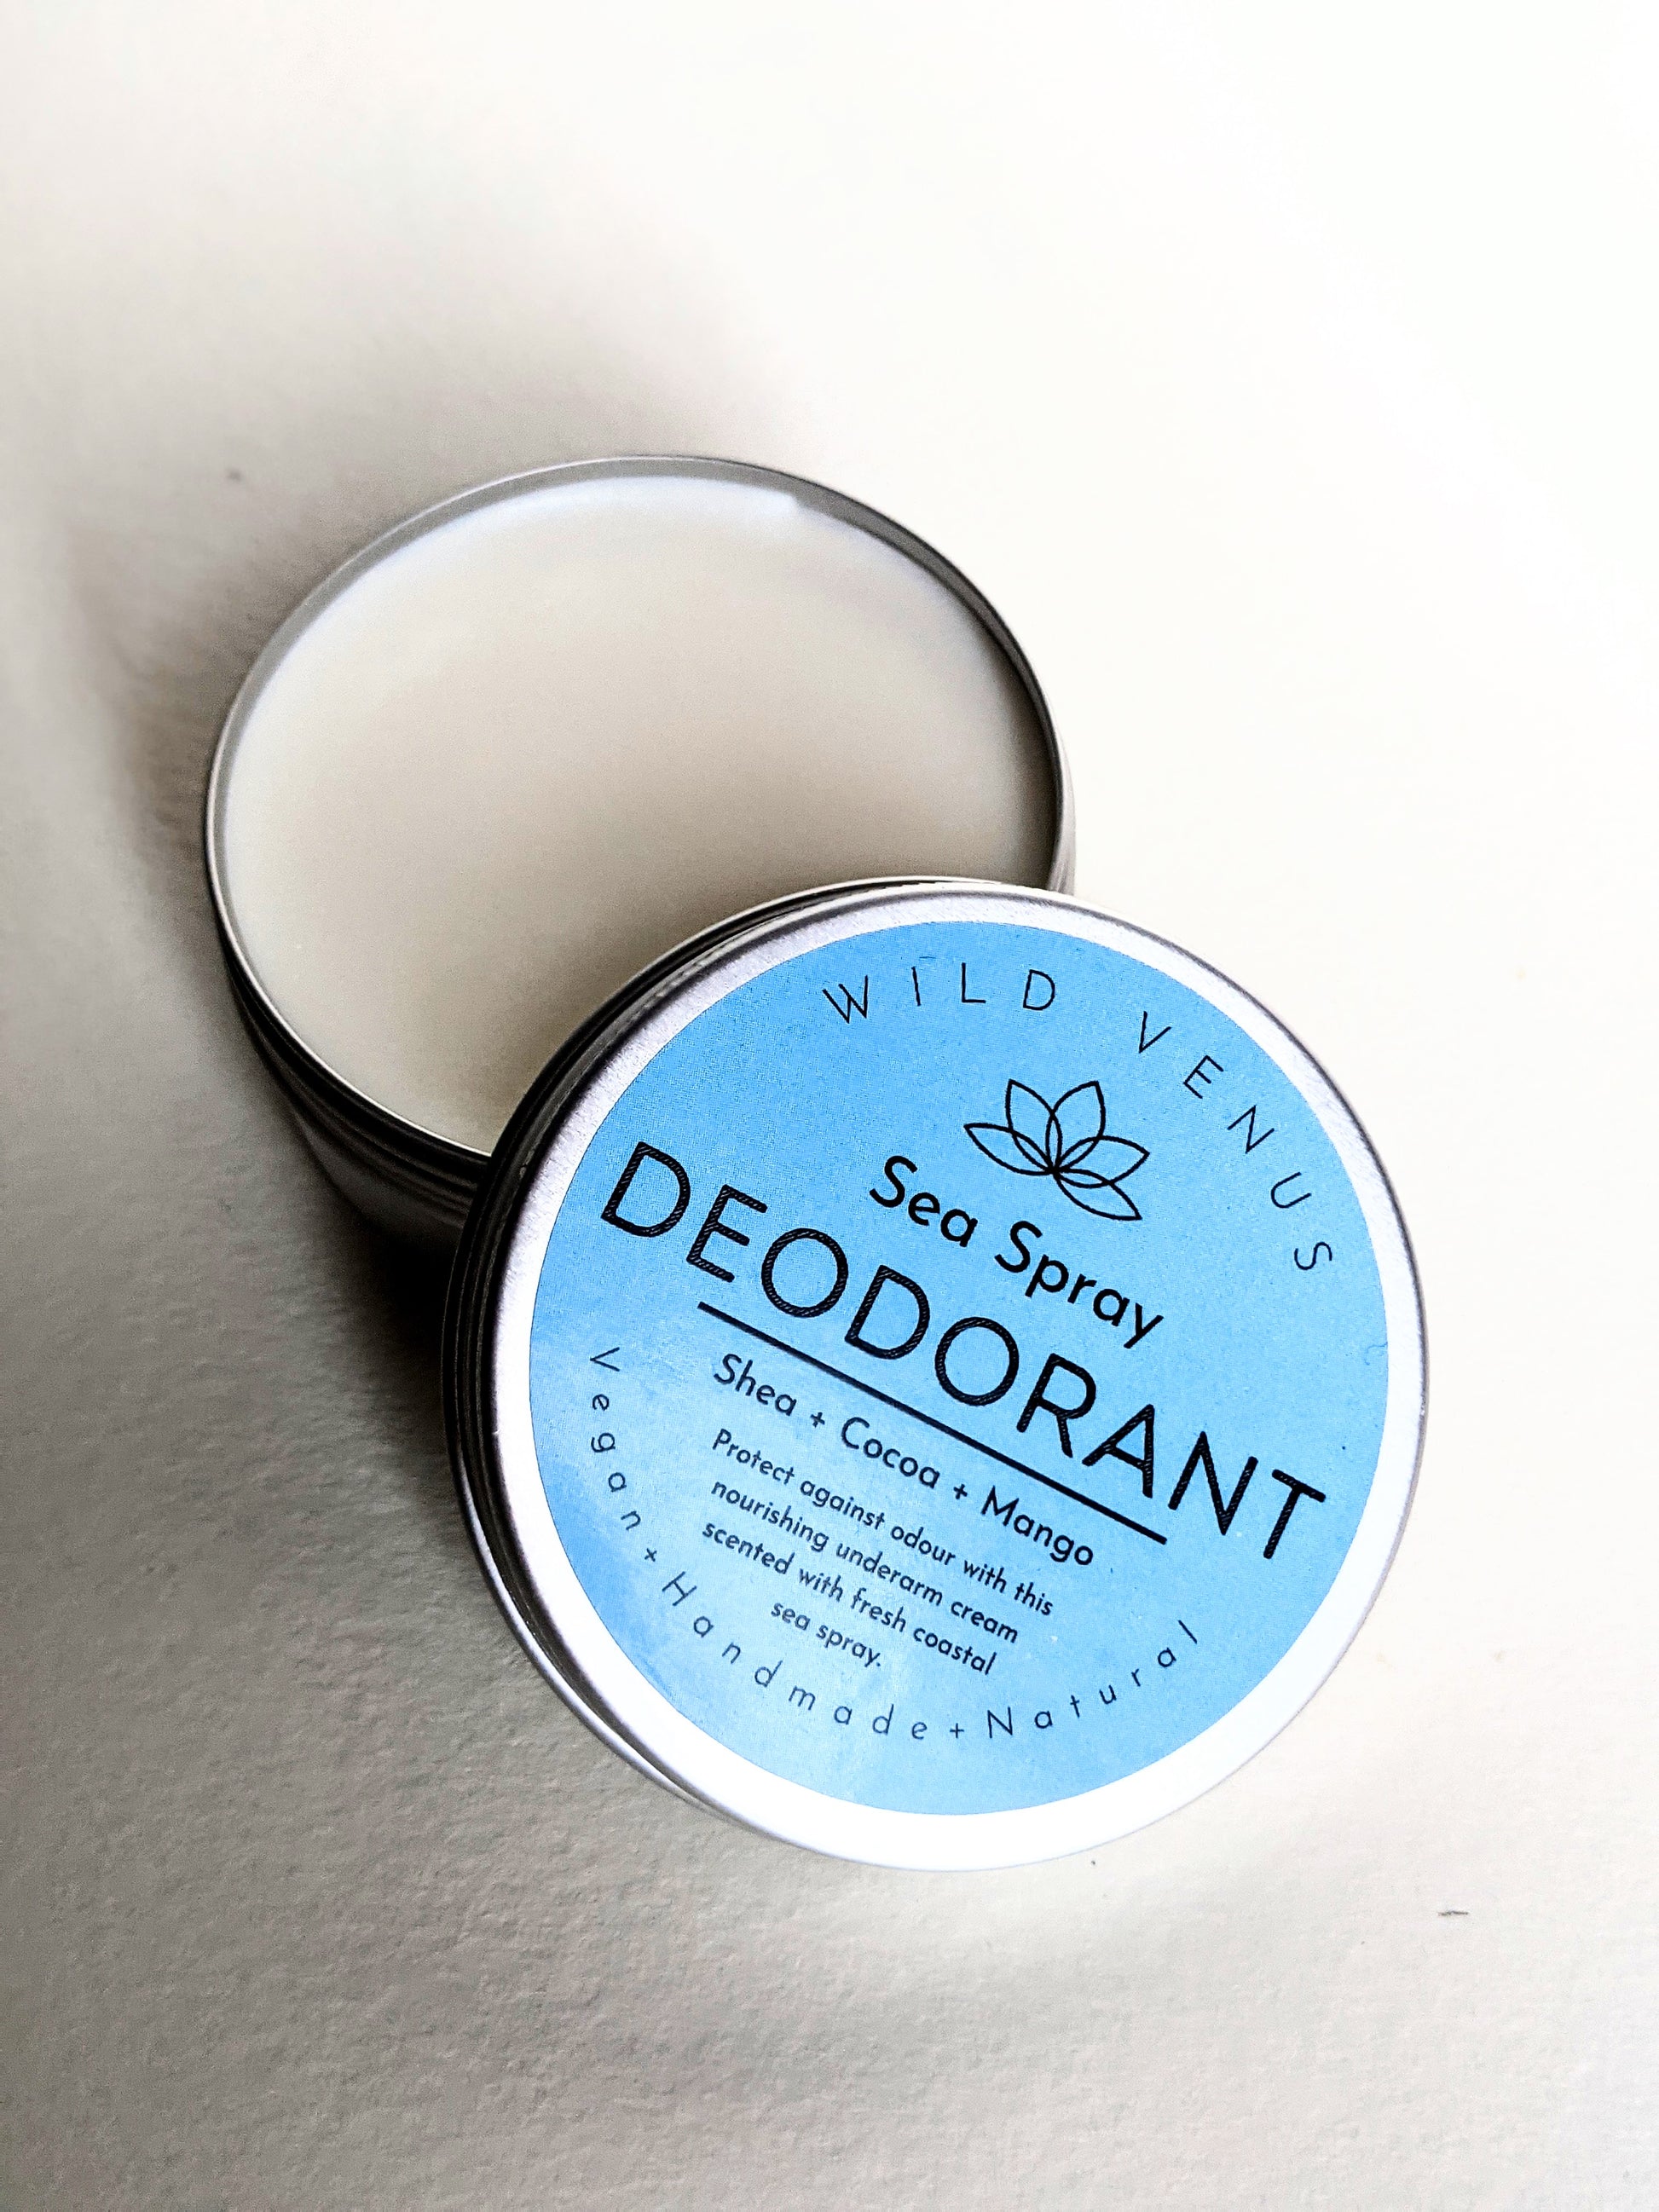 An open tin of Sea Spray Deodorant.